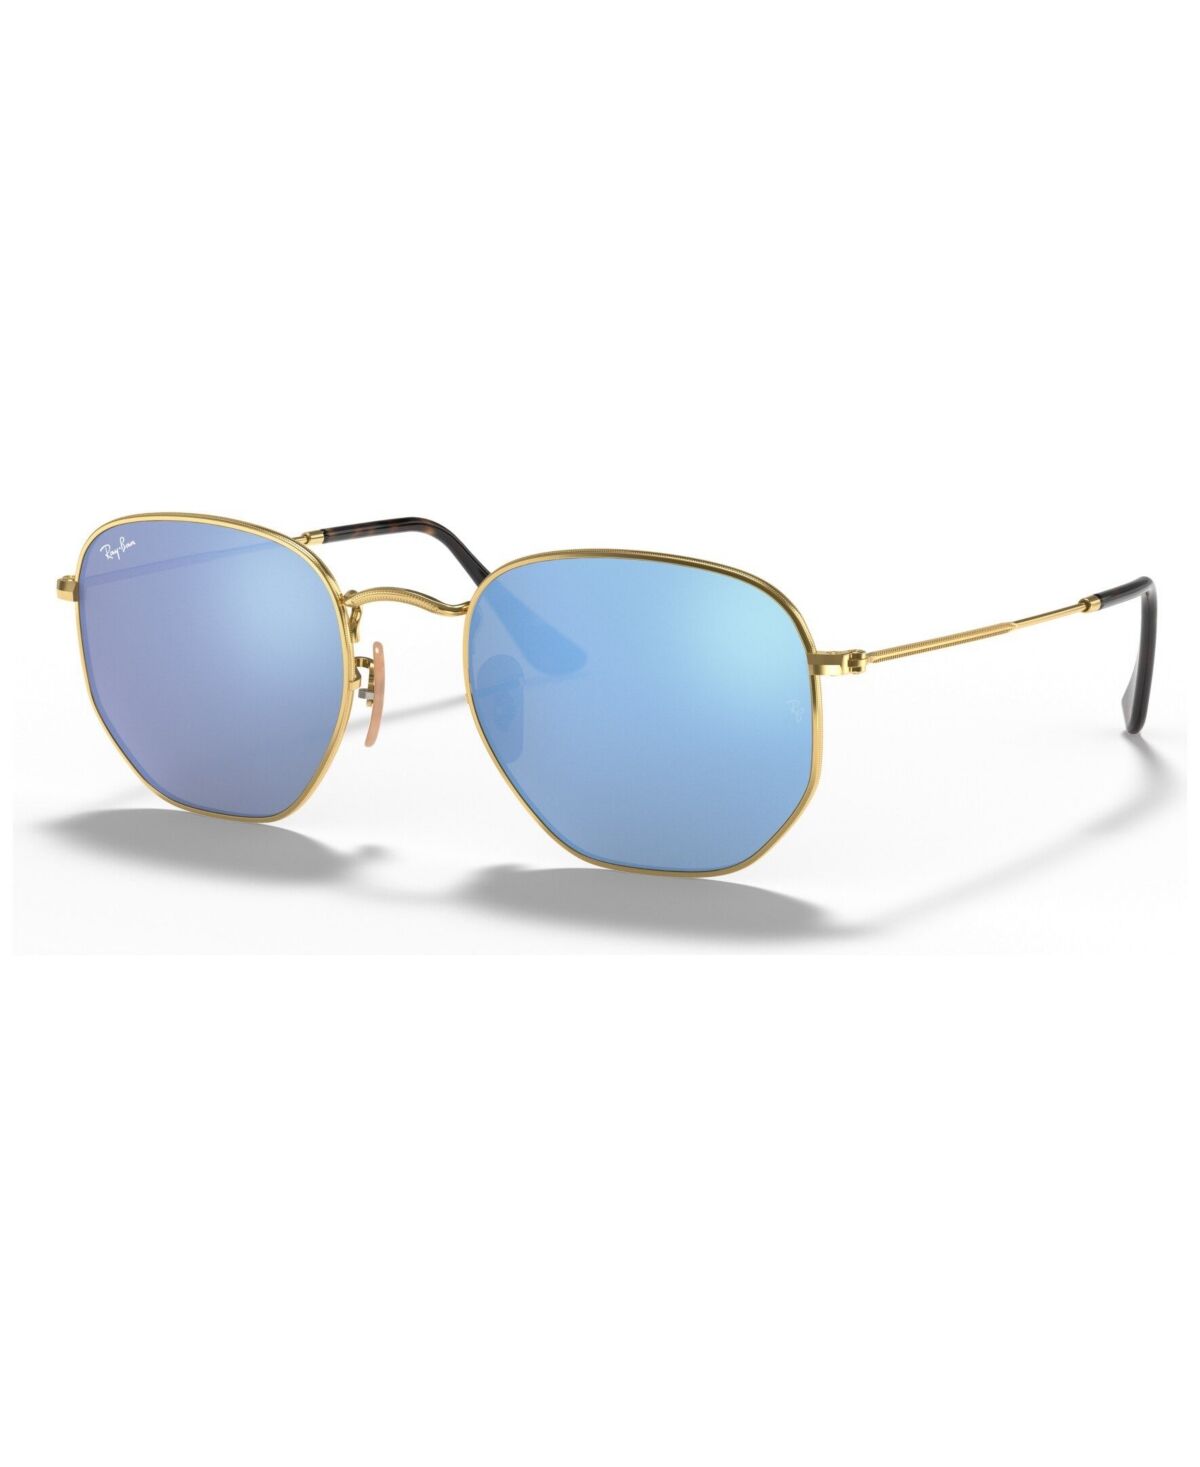 Ray-Ban Sunglasses, RB3548N Hexagonal Flat Lenses - GOLD/BLUE MIRROR